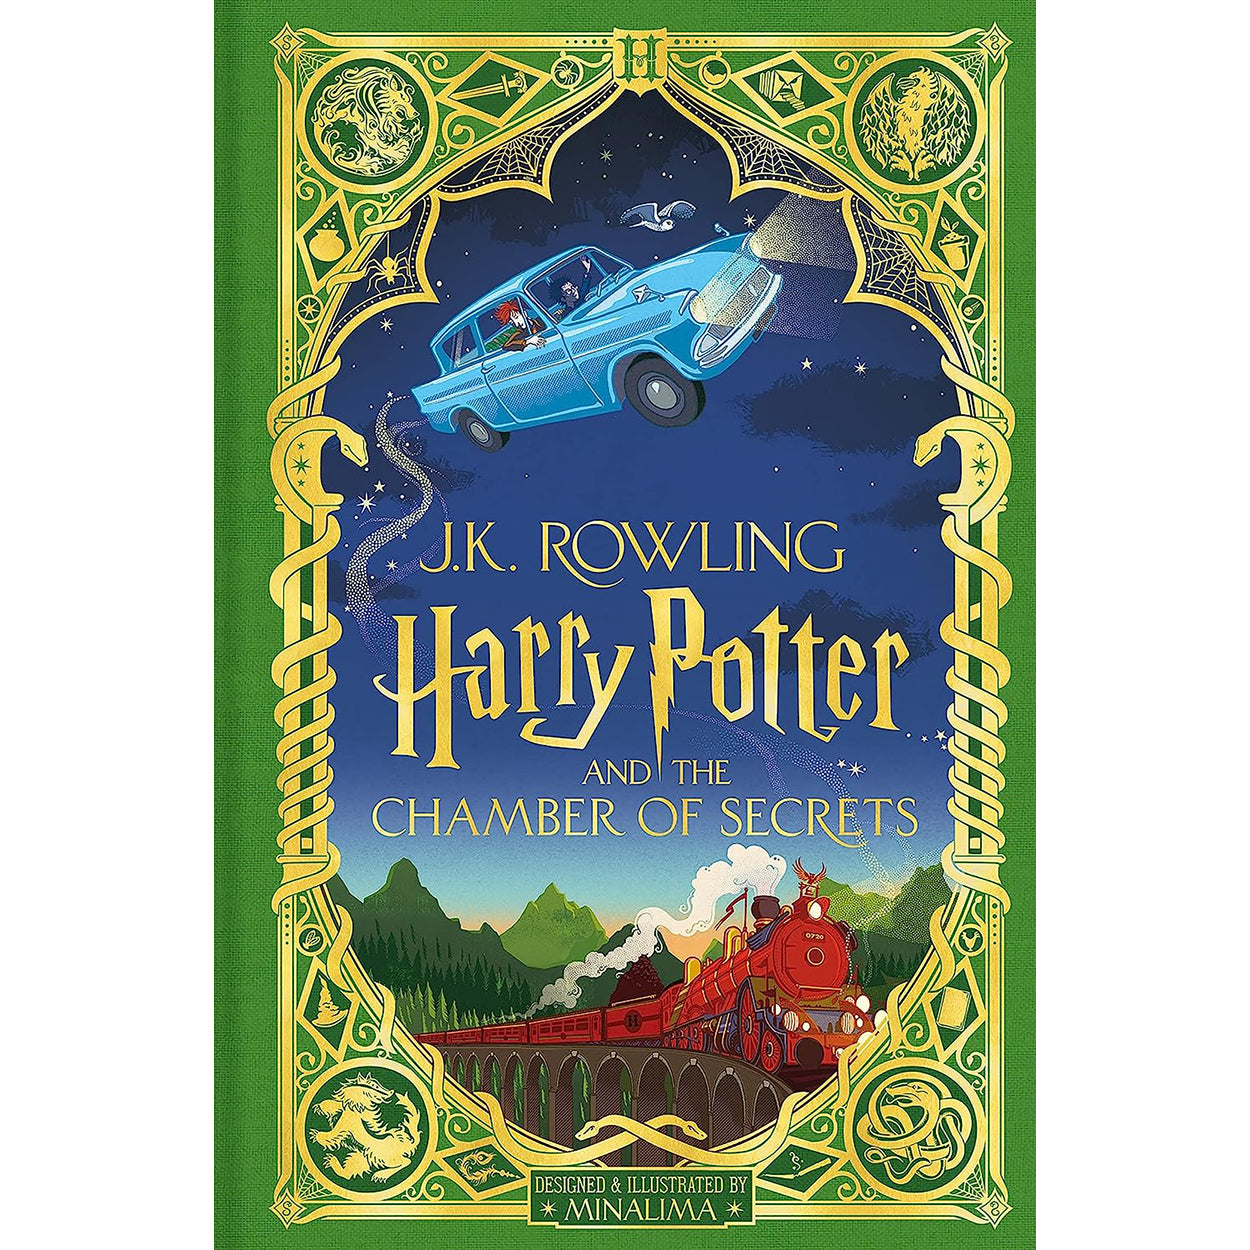 Harry Potter - Tea for One (Hedwig), HMBTFOR1HP03